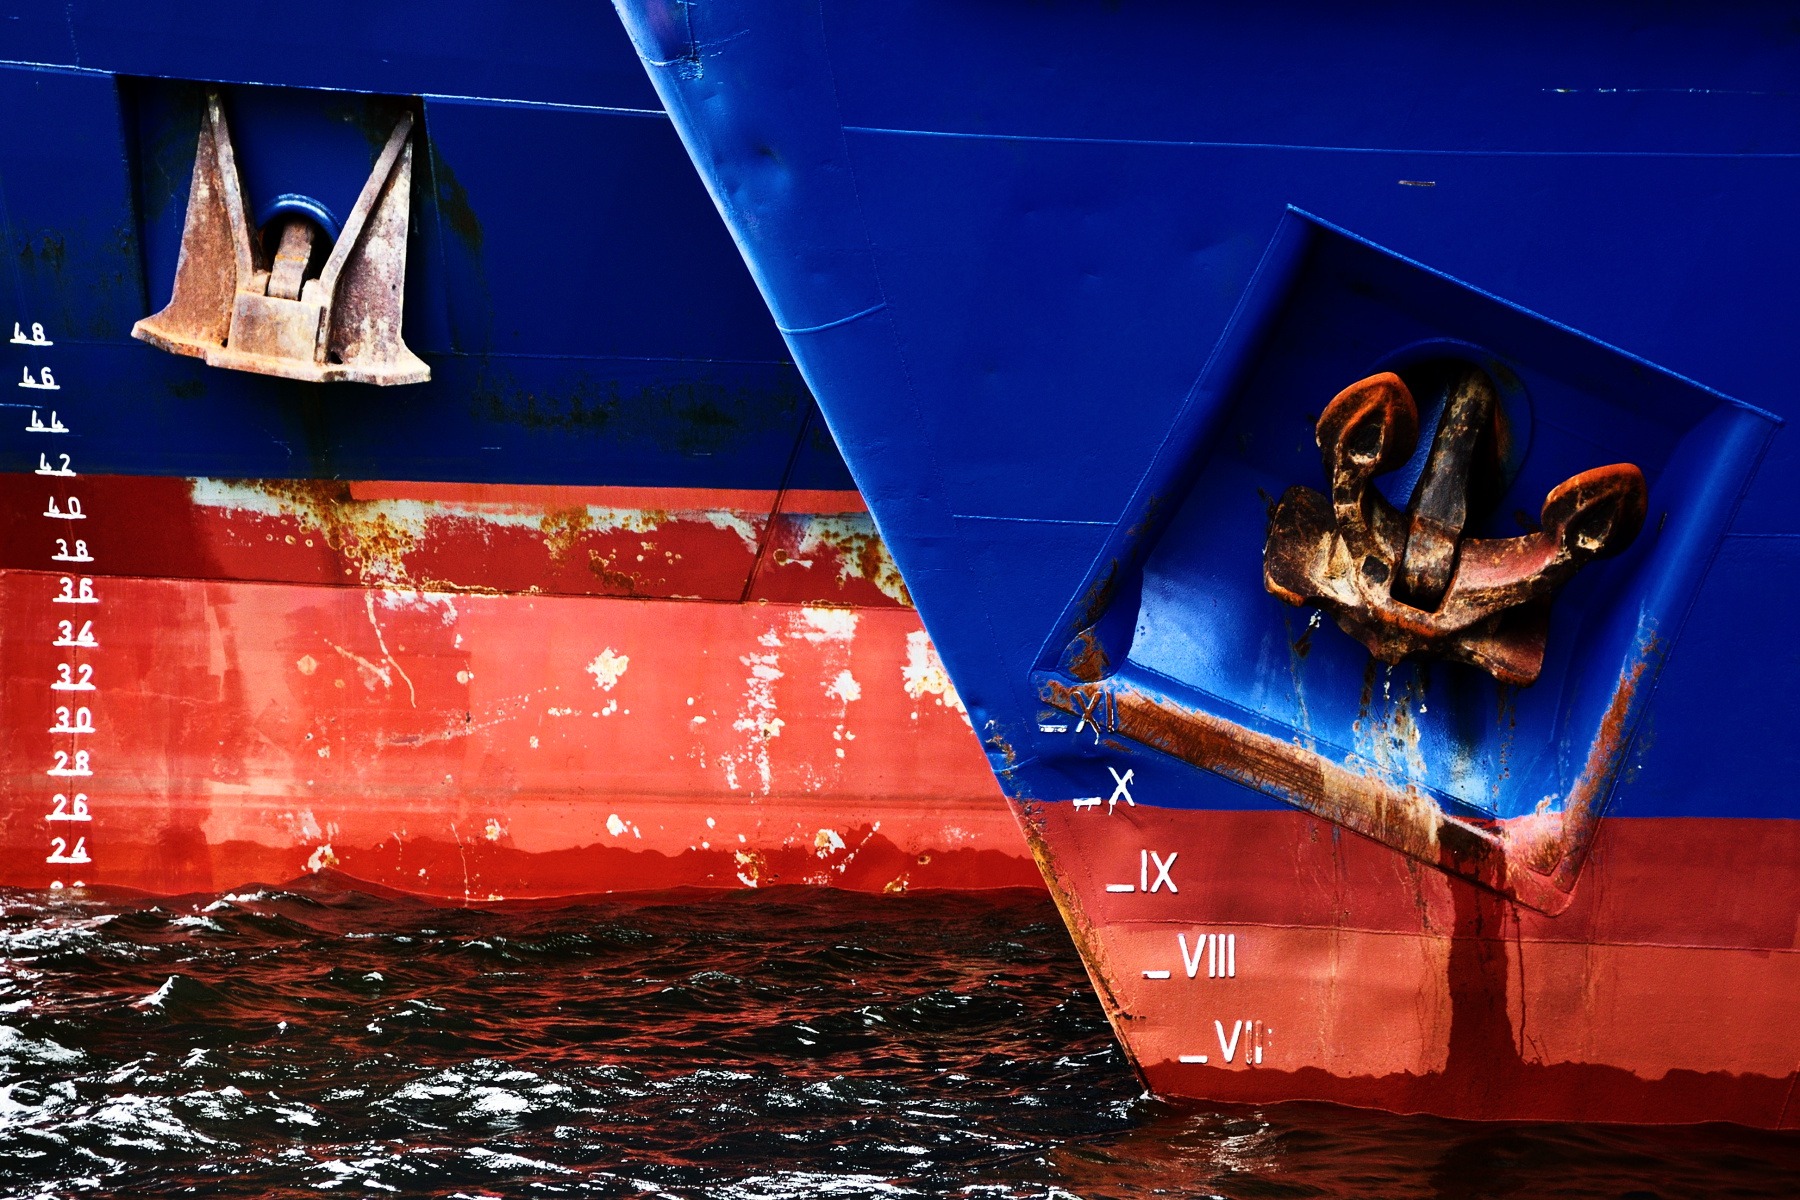 Корабли в моей гавани | Фотограф Александр Кузнецов | foto.by фото.бай